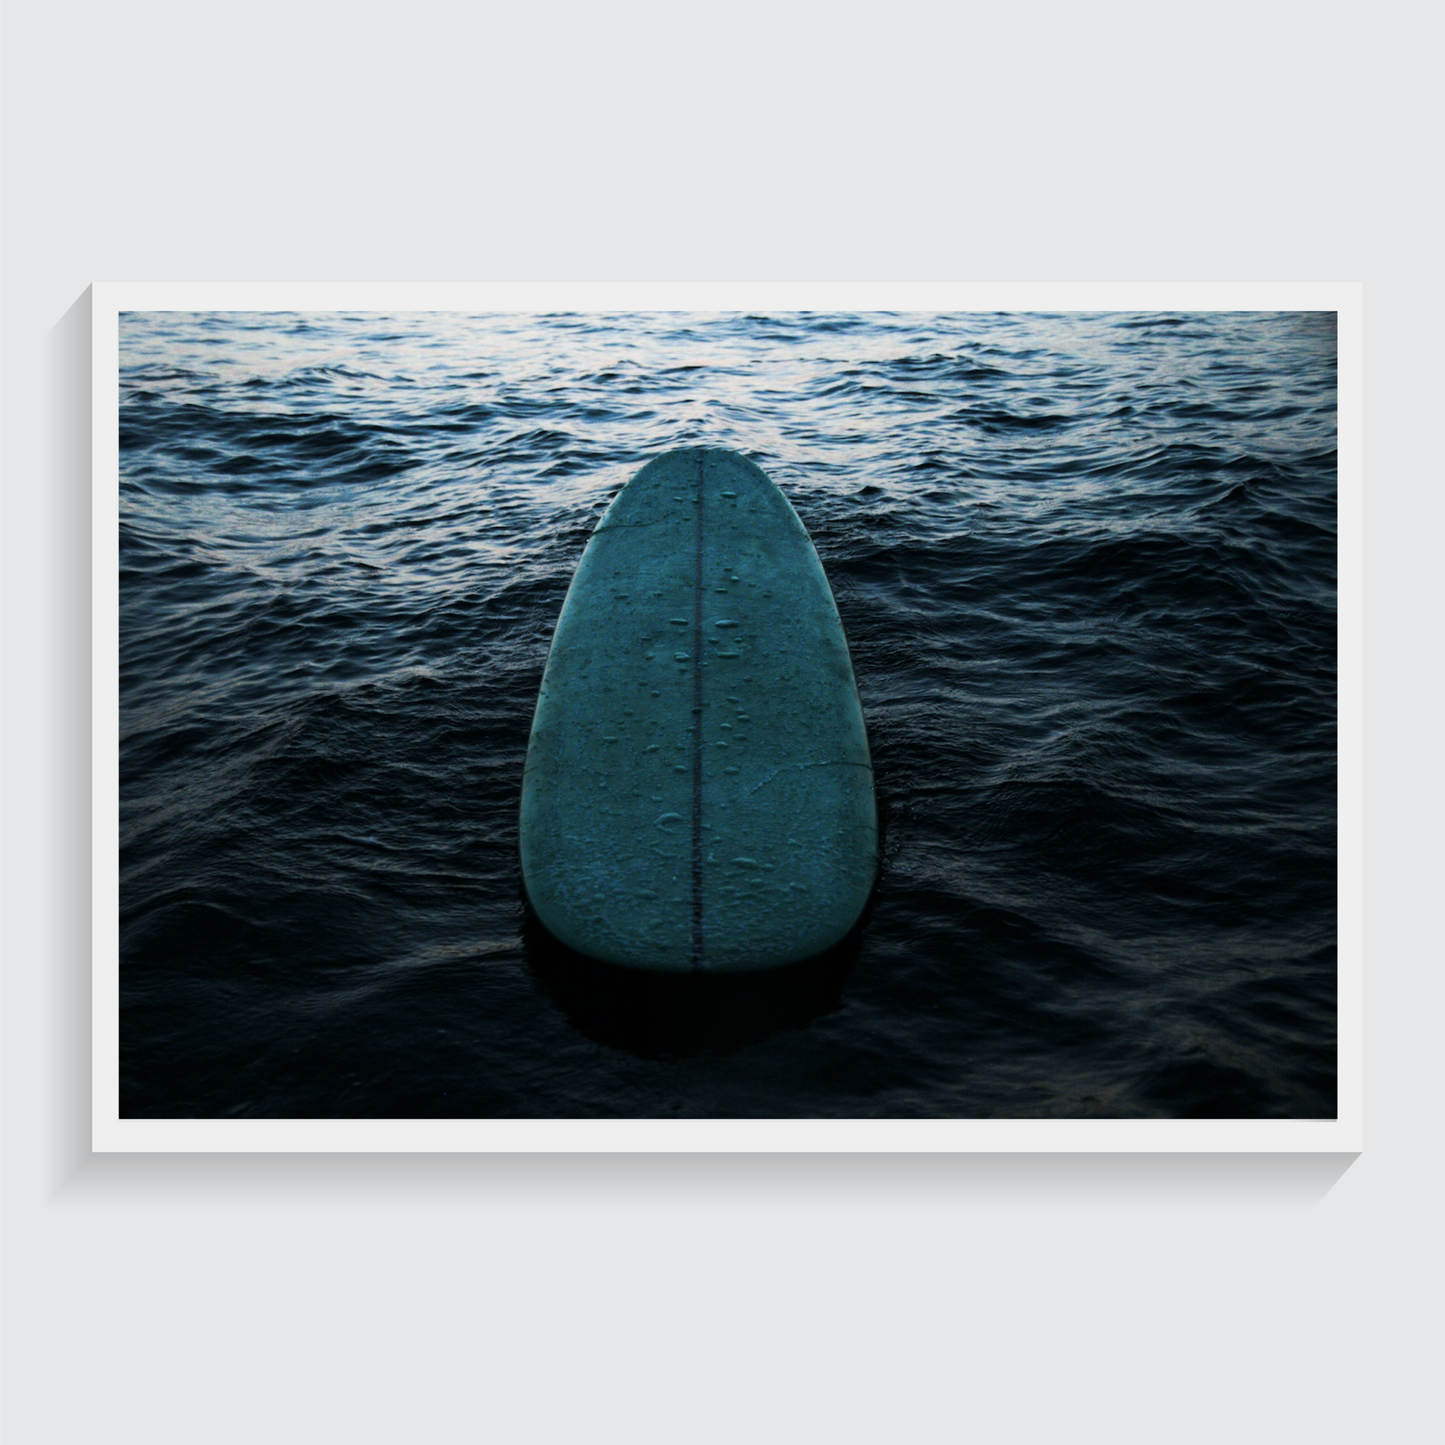 Green Surfboard